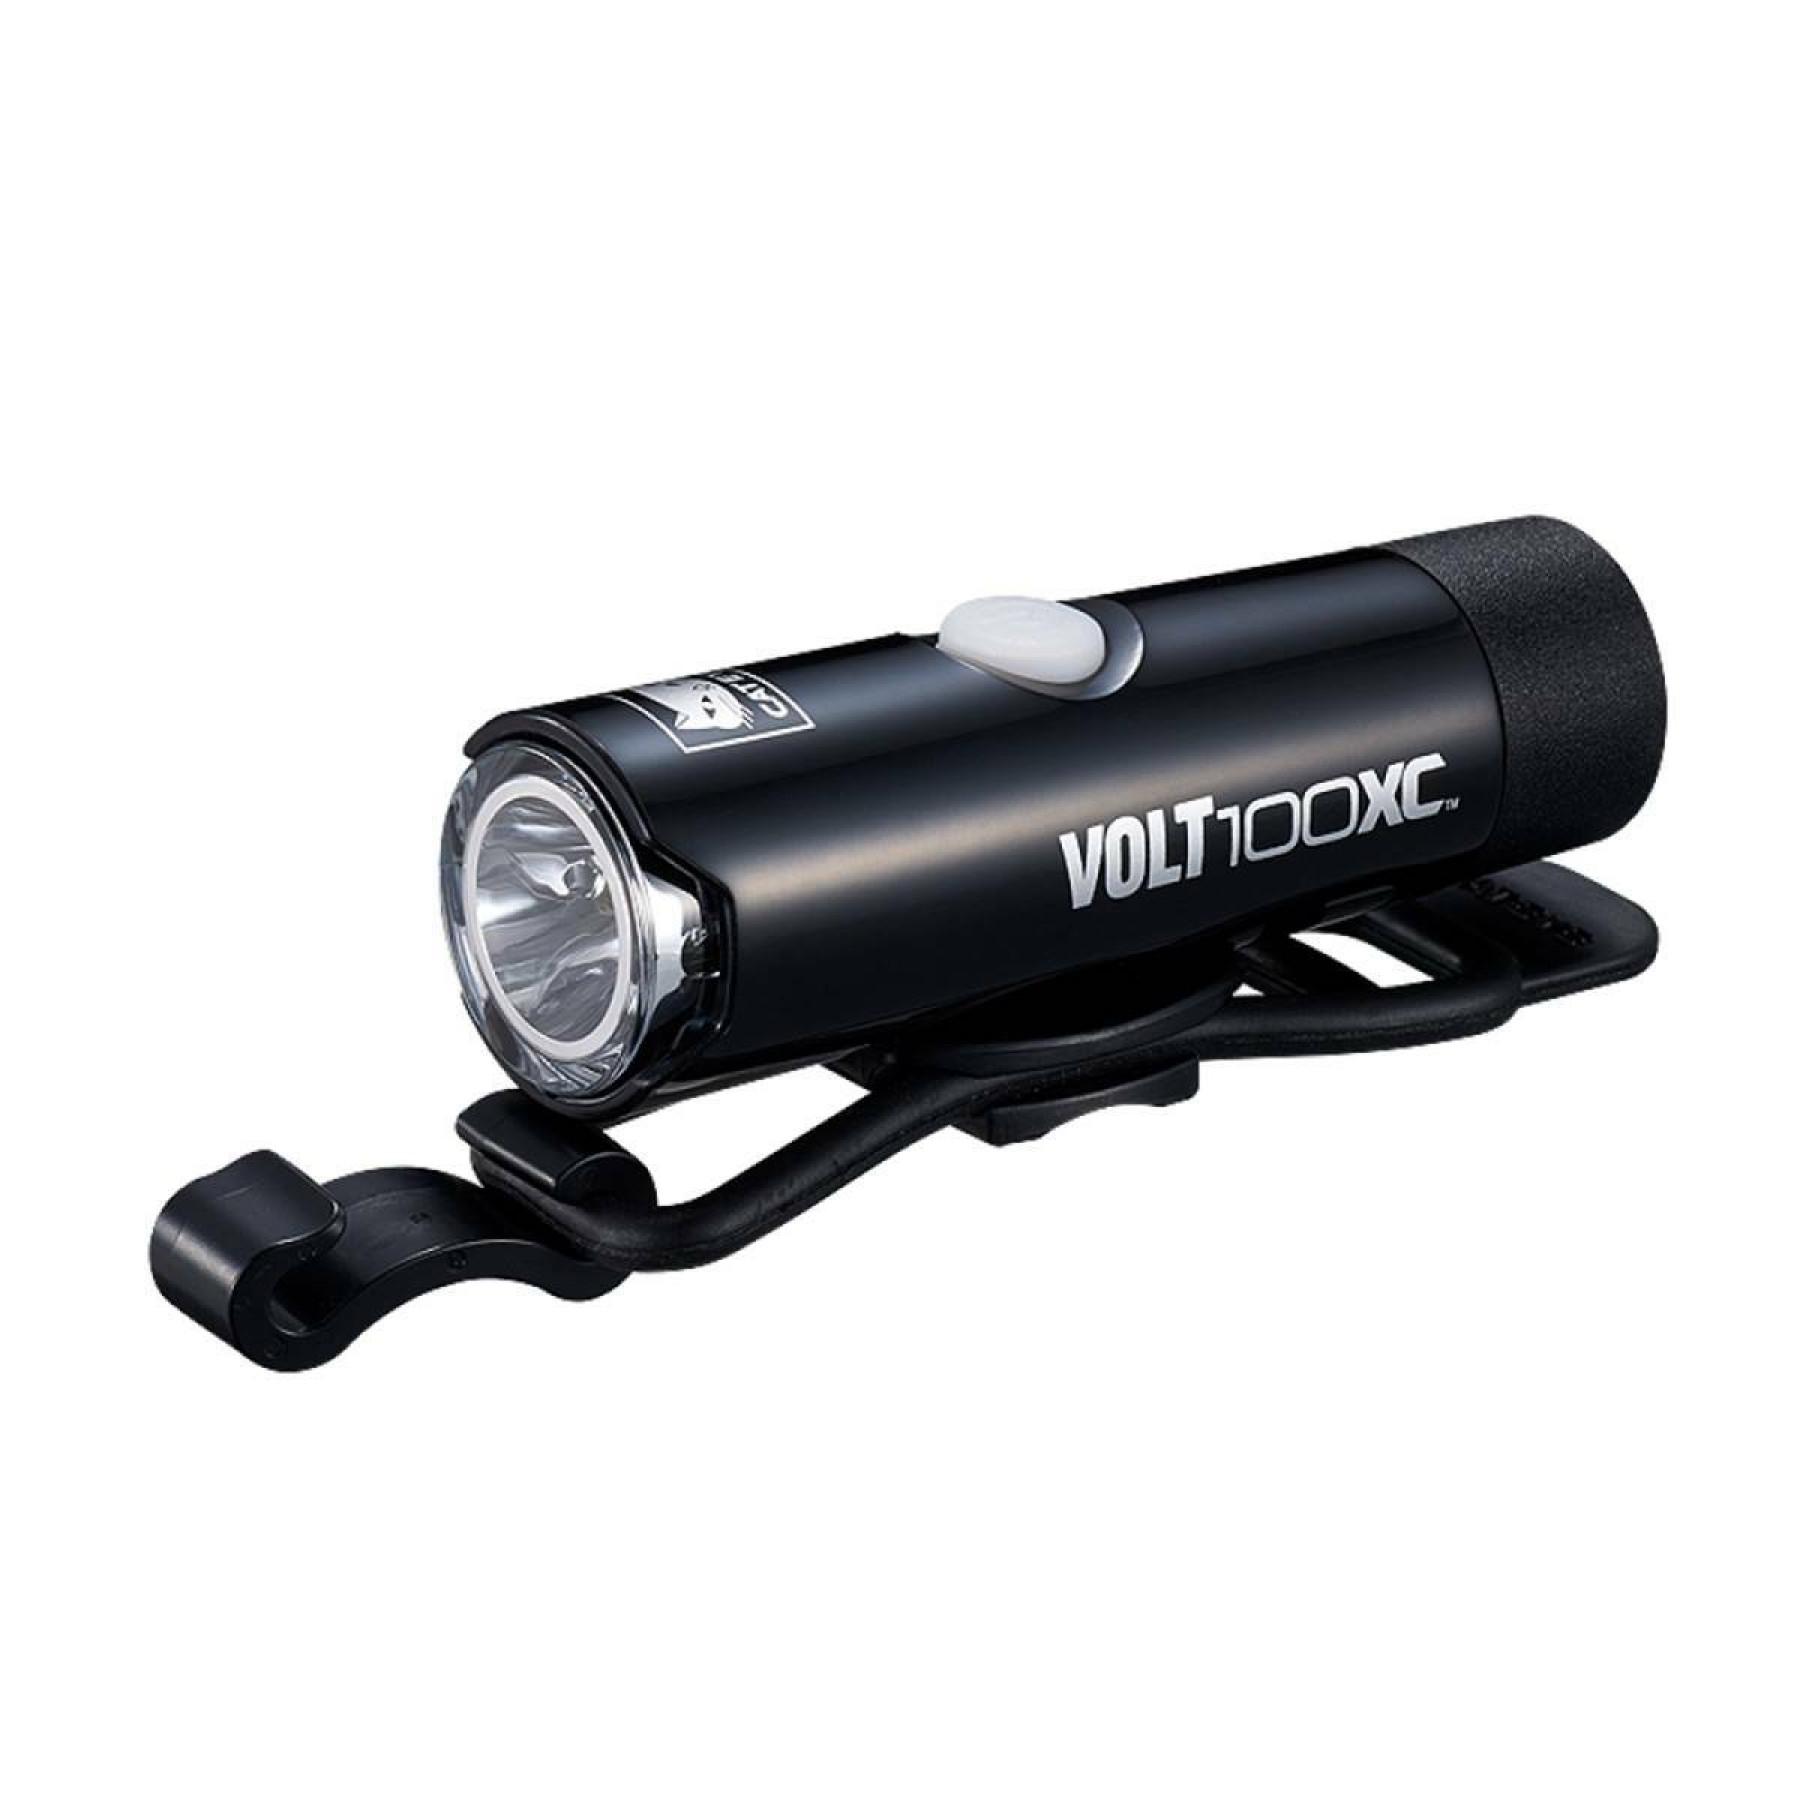 Fahrradlichter Cateye Volt 100 XC rechargeable/Orb pile